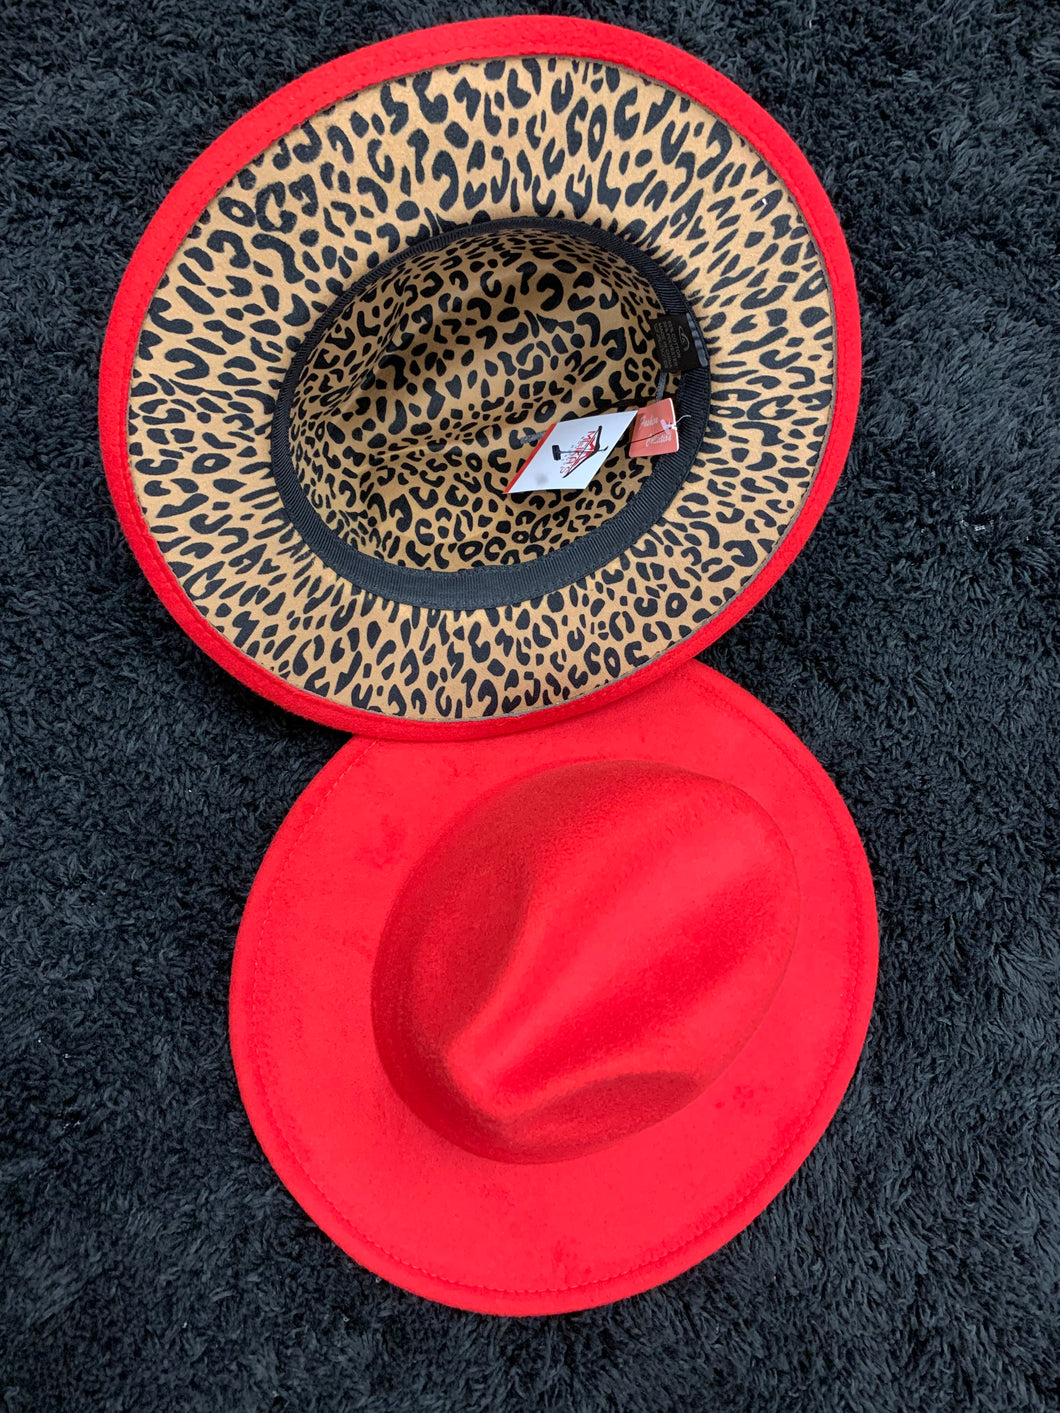 Red Fedora Hat with Leopard Bottom Adjustable Strings inside Hat